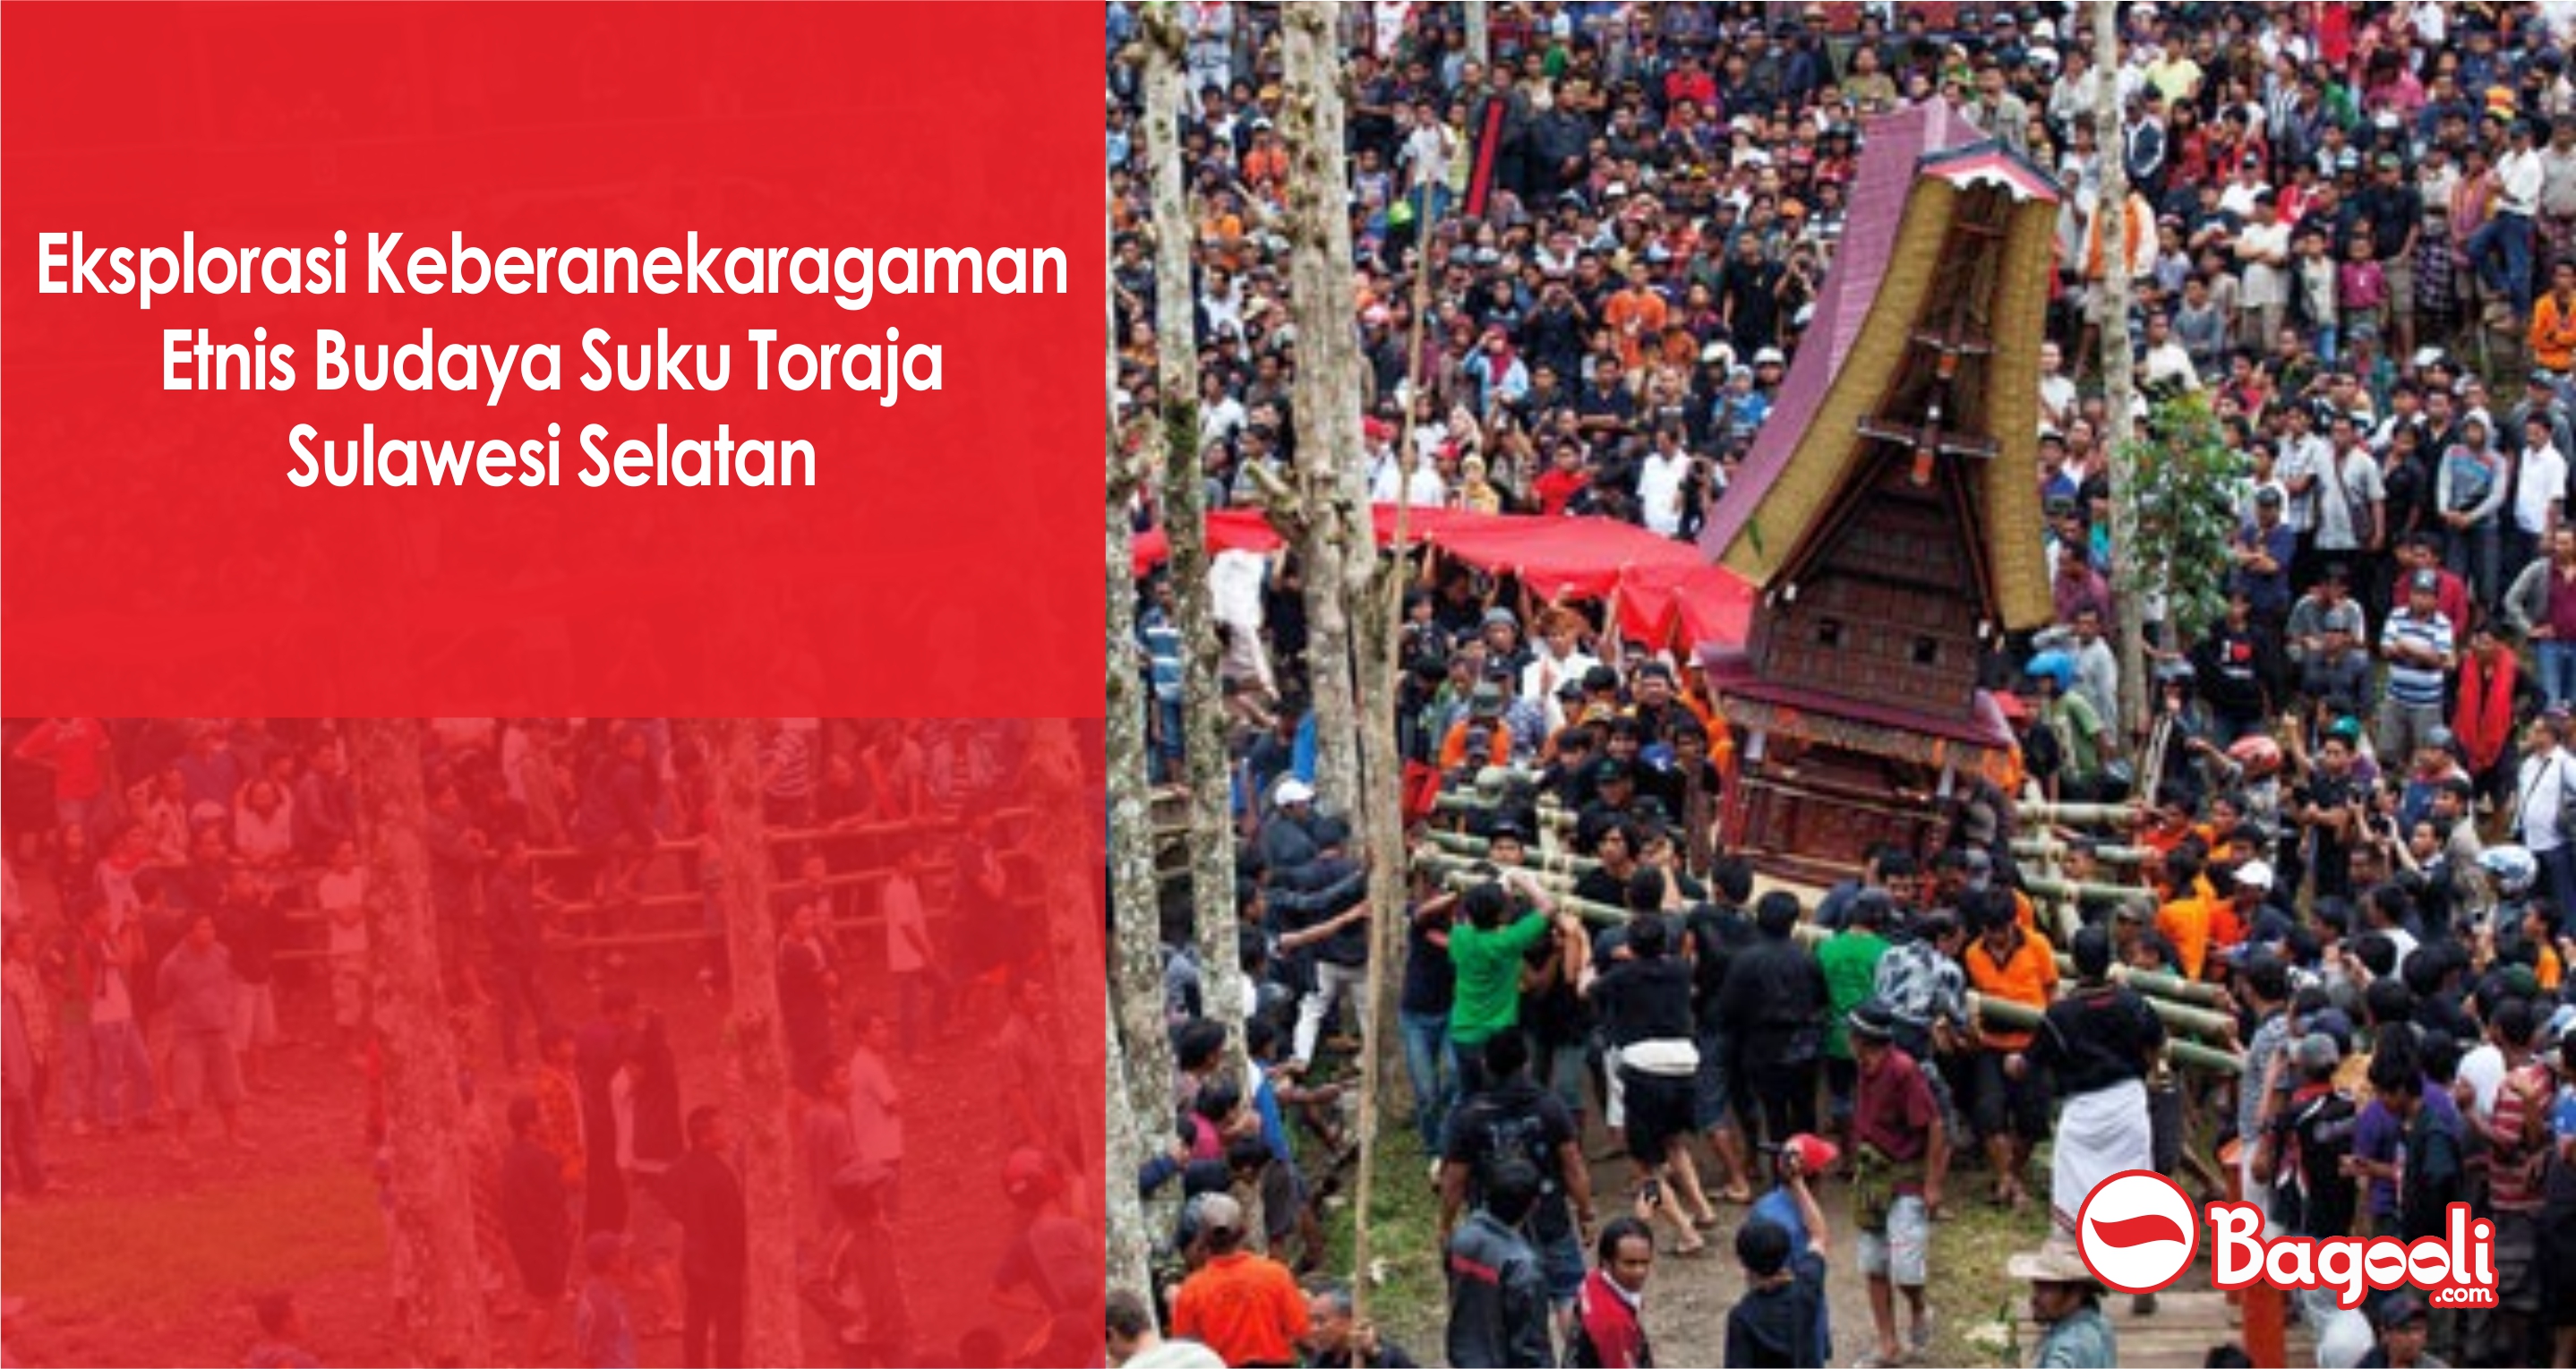 Eksplorasi Keberanekaragaman Etnis Budaya Suku Toraja Sulawesi Selatan